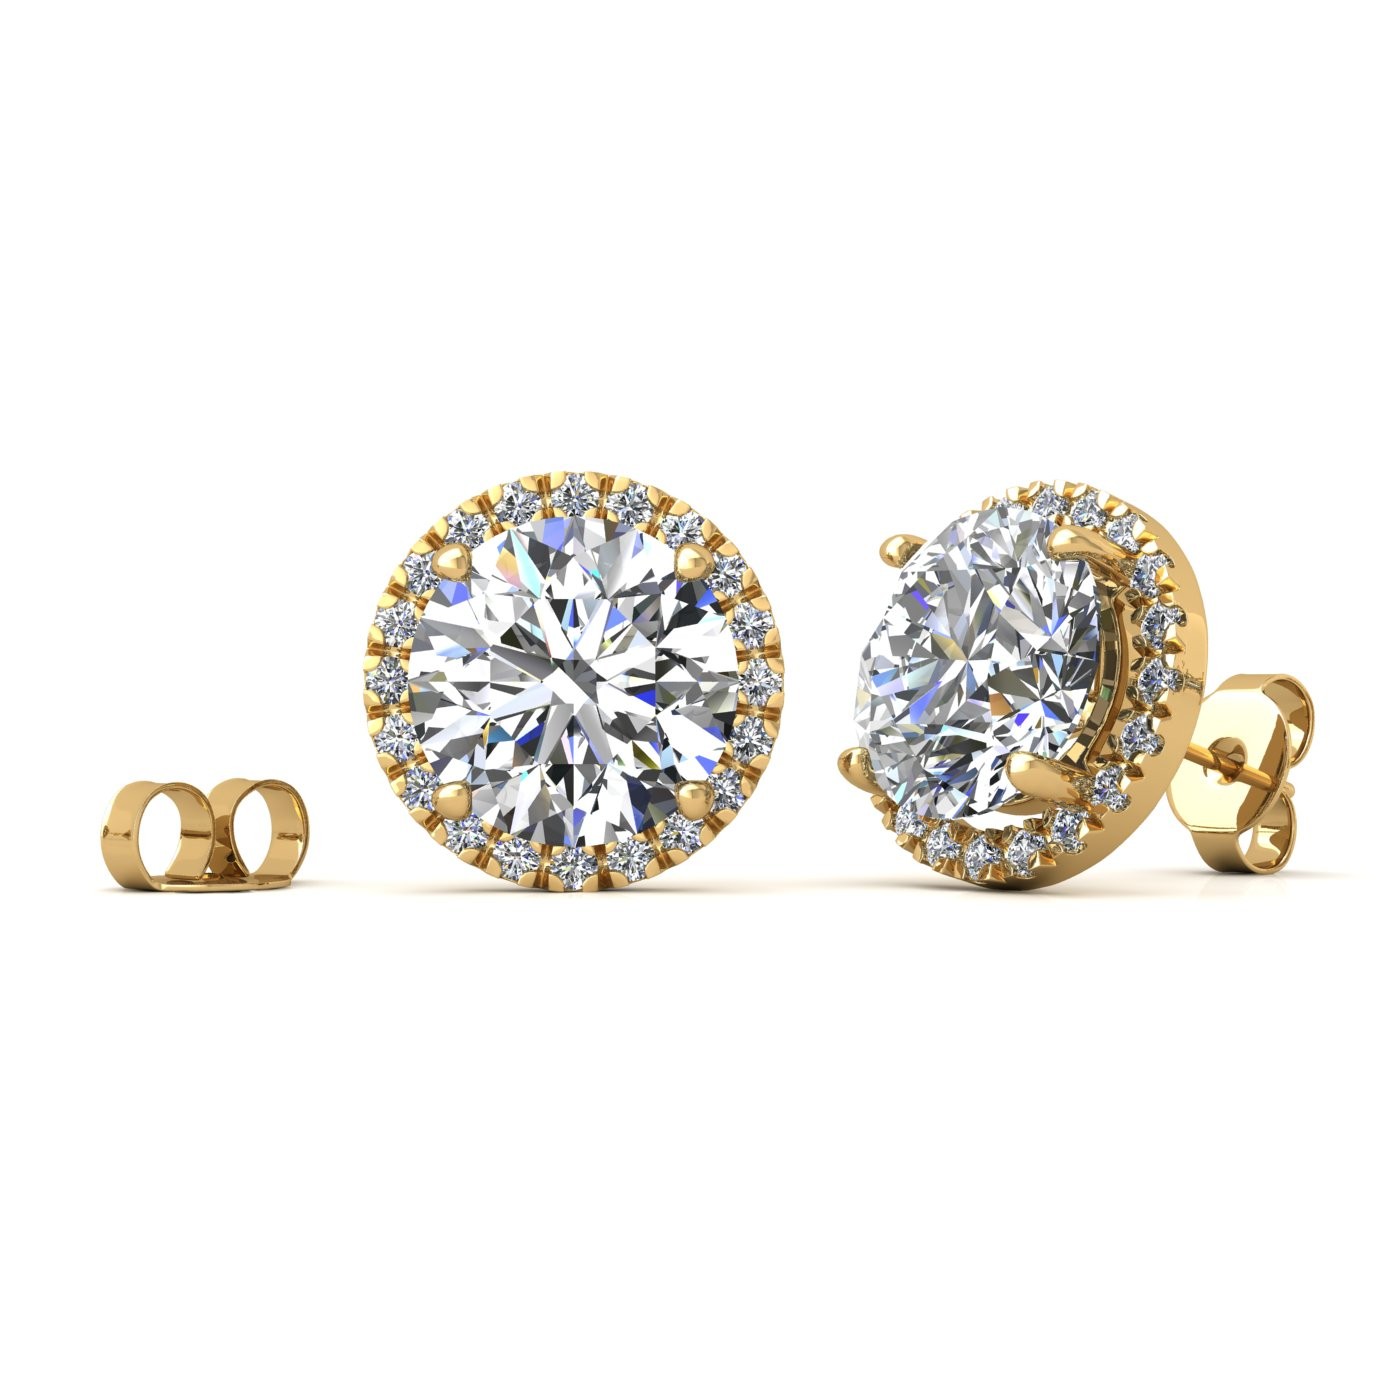 18k white gold  2 ct each (4,0 tcw) 4 prongs round shape diamond earrings with diamond pavÉ set halo Photos & images